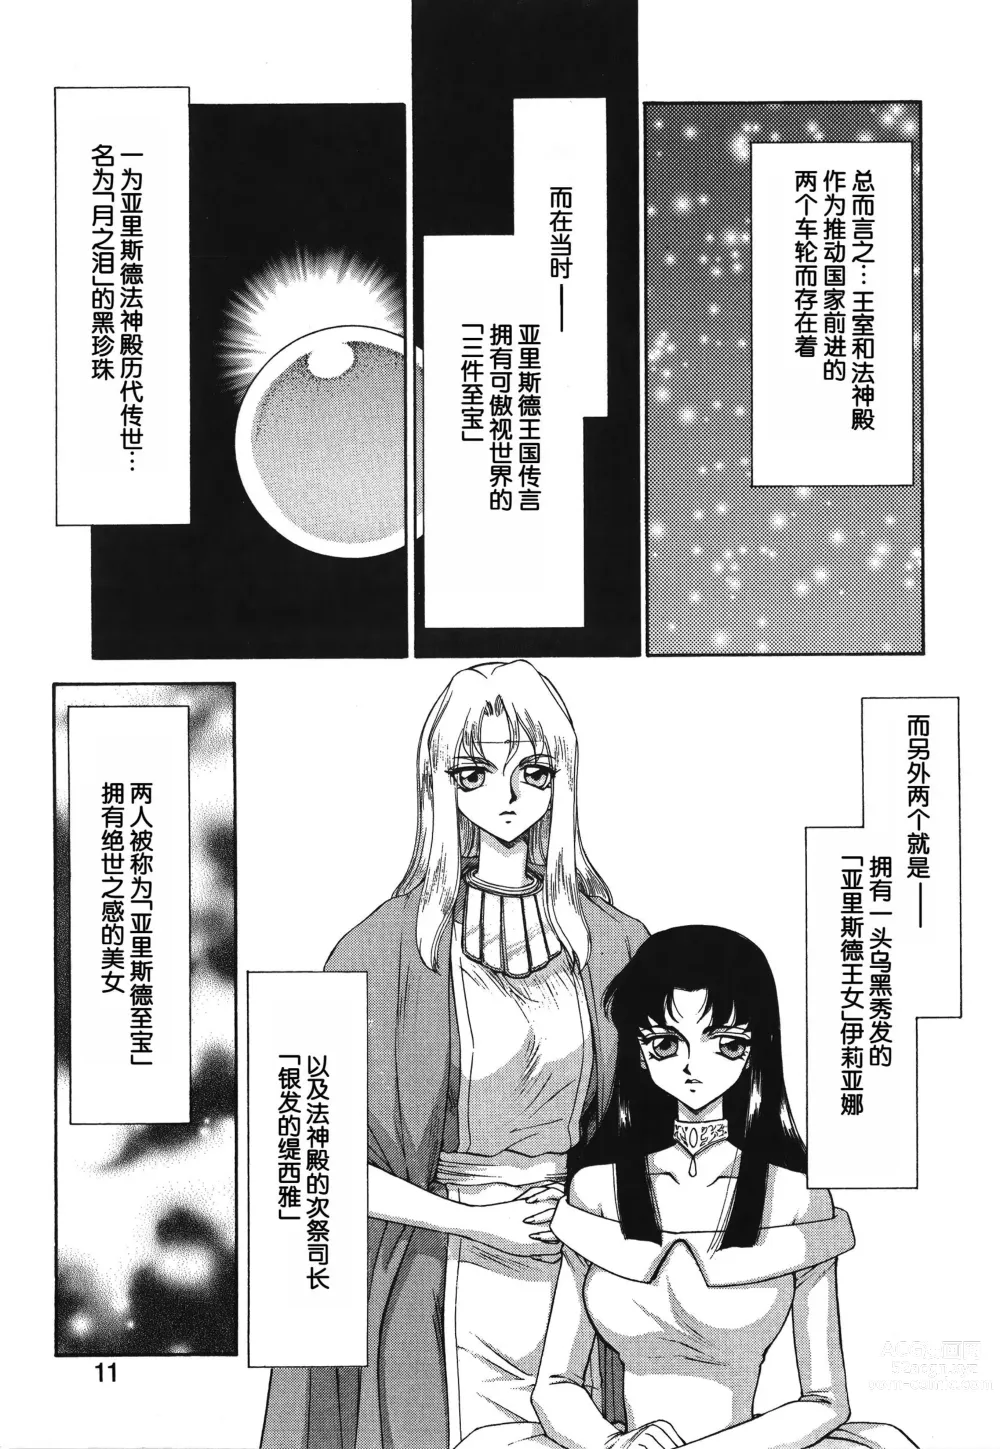 Page 11 of manga Bad Moon...